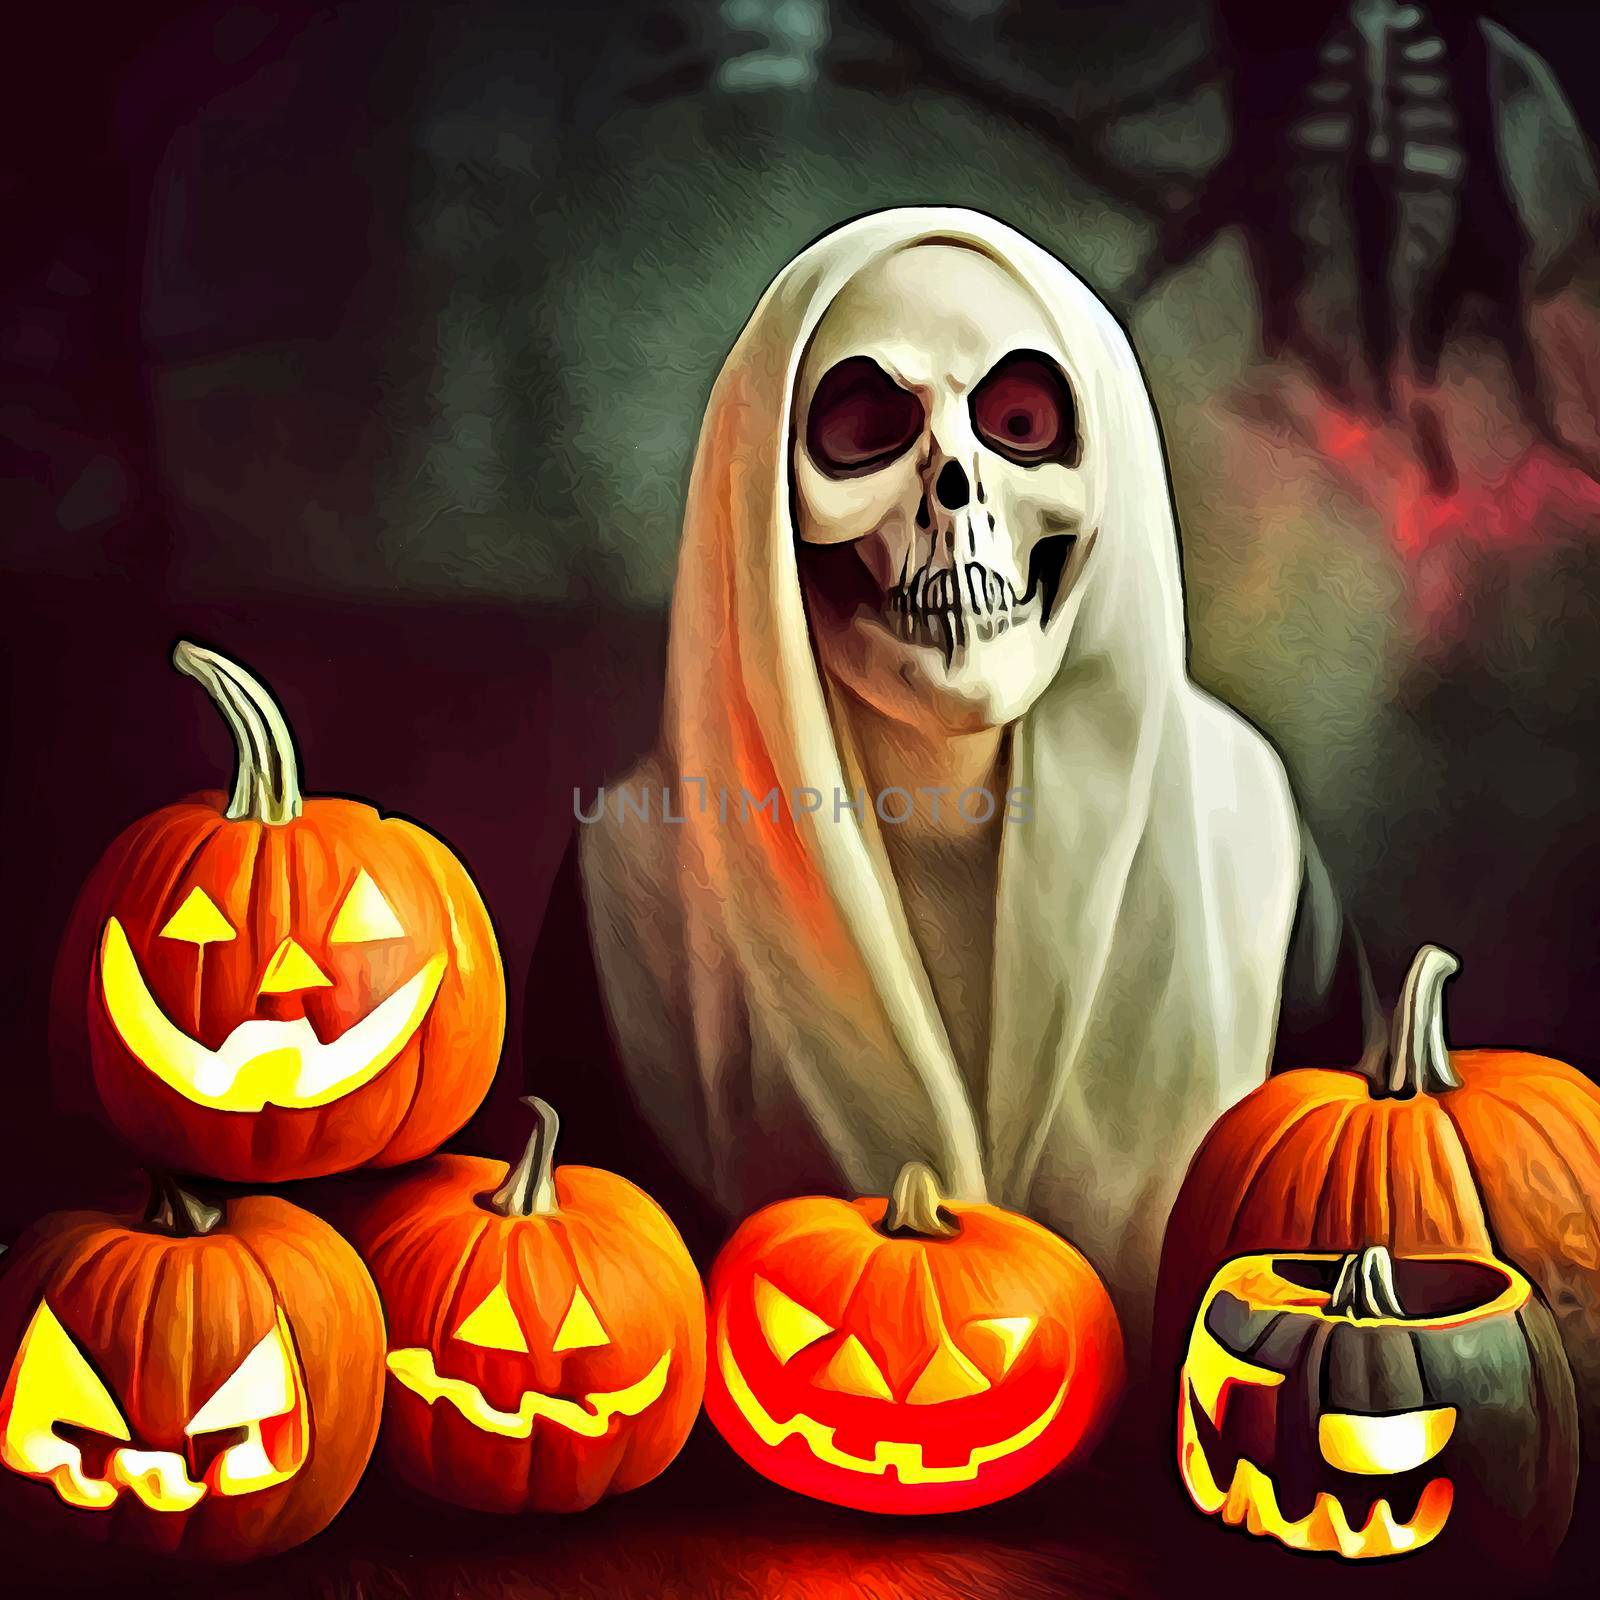 skull on halloween night with evil pumpkins. hallowen illustration by JpRamos